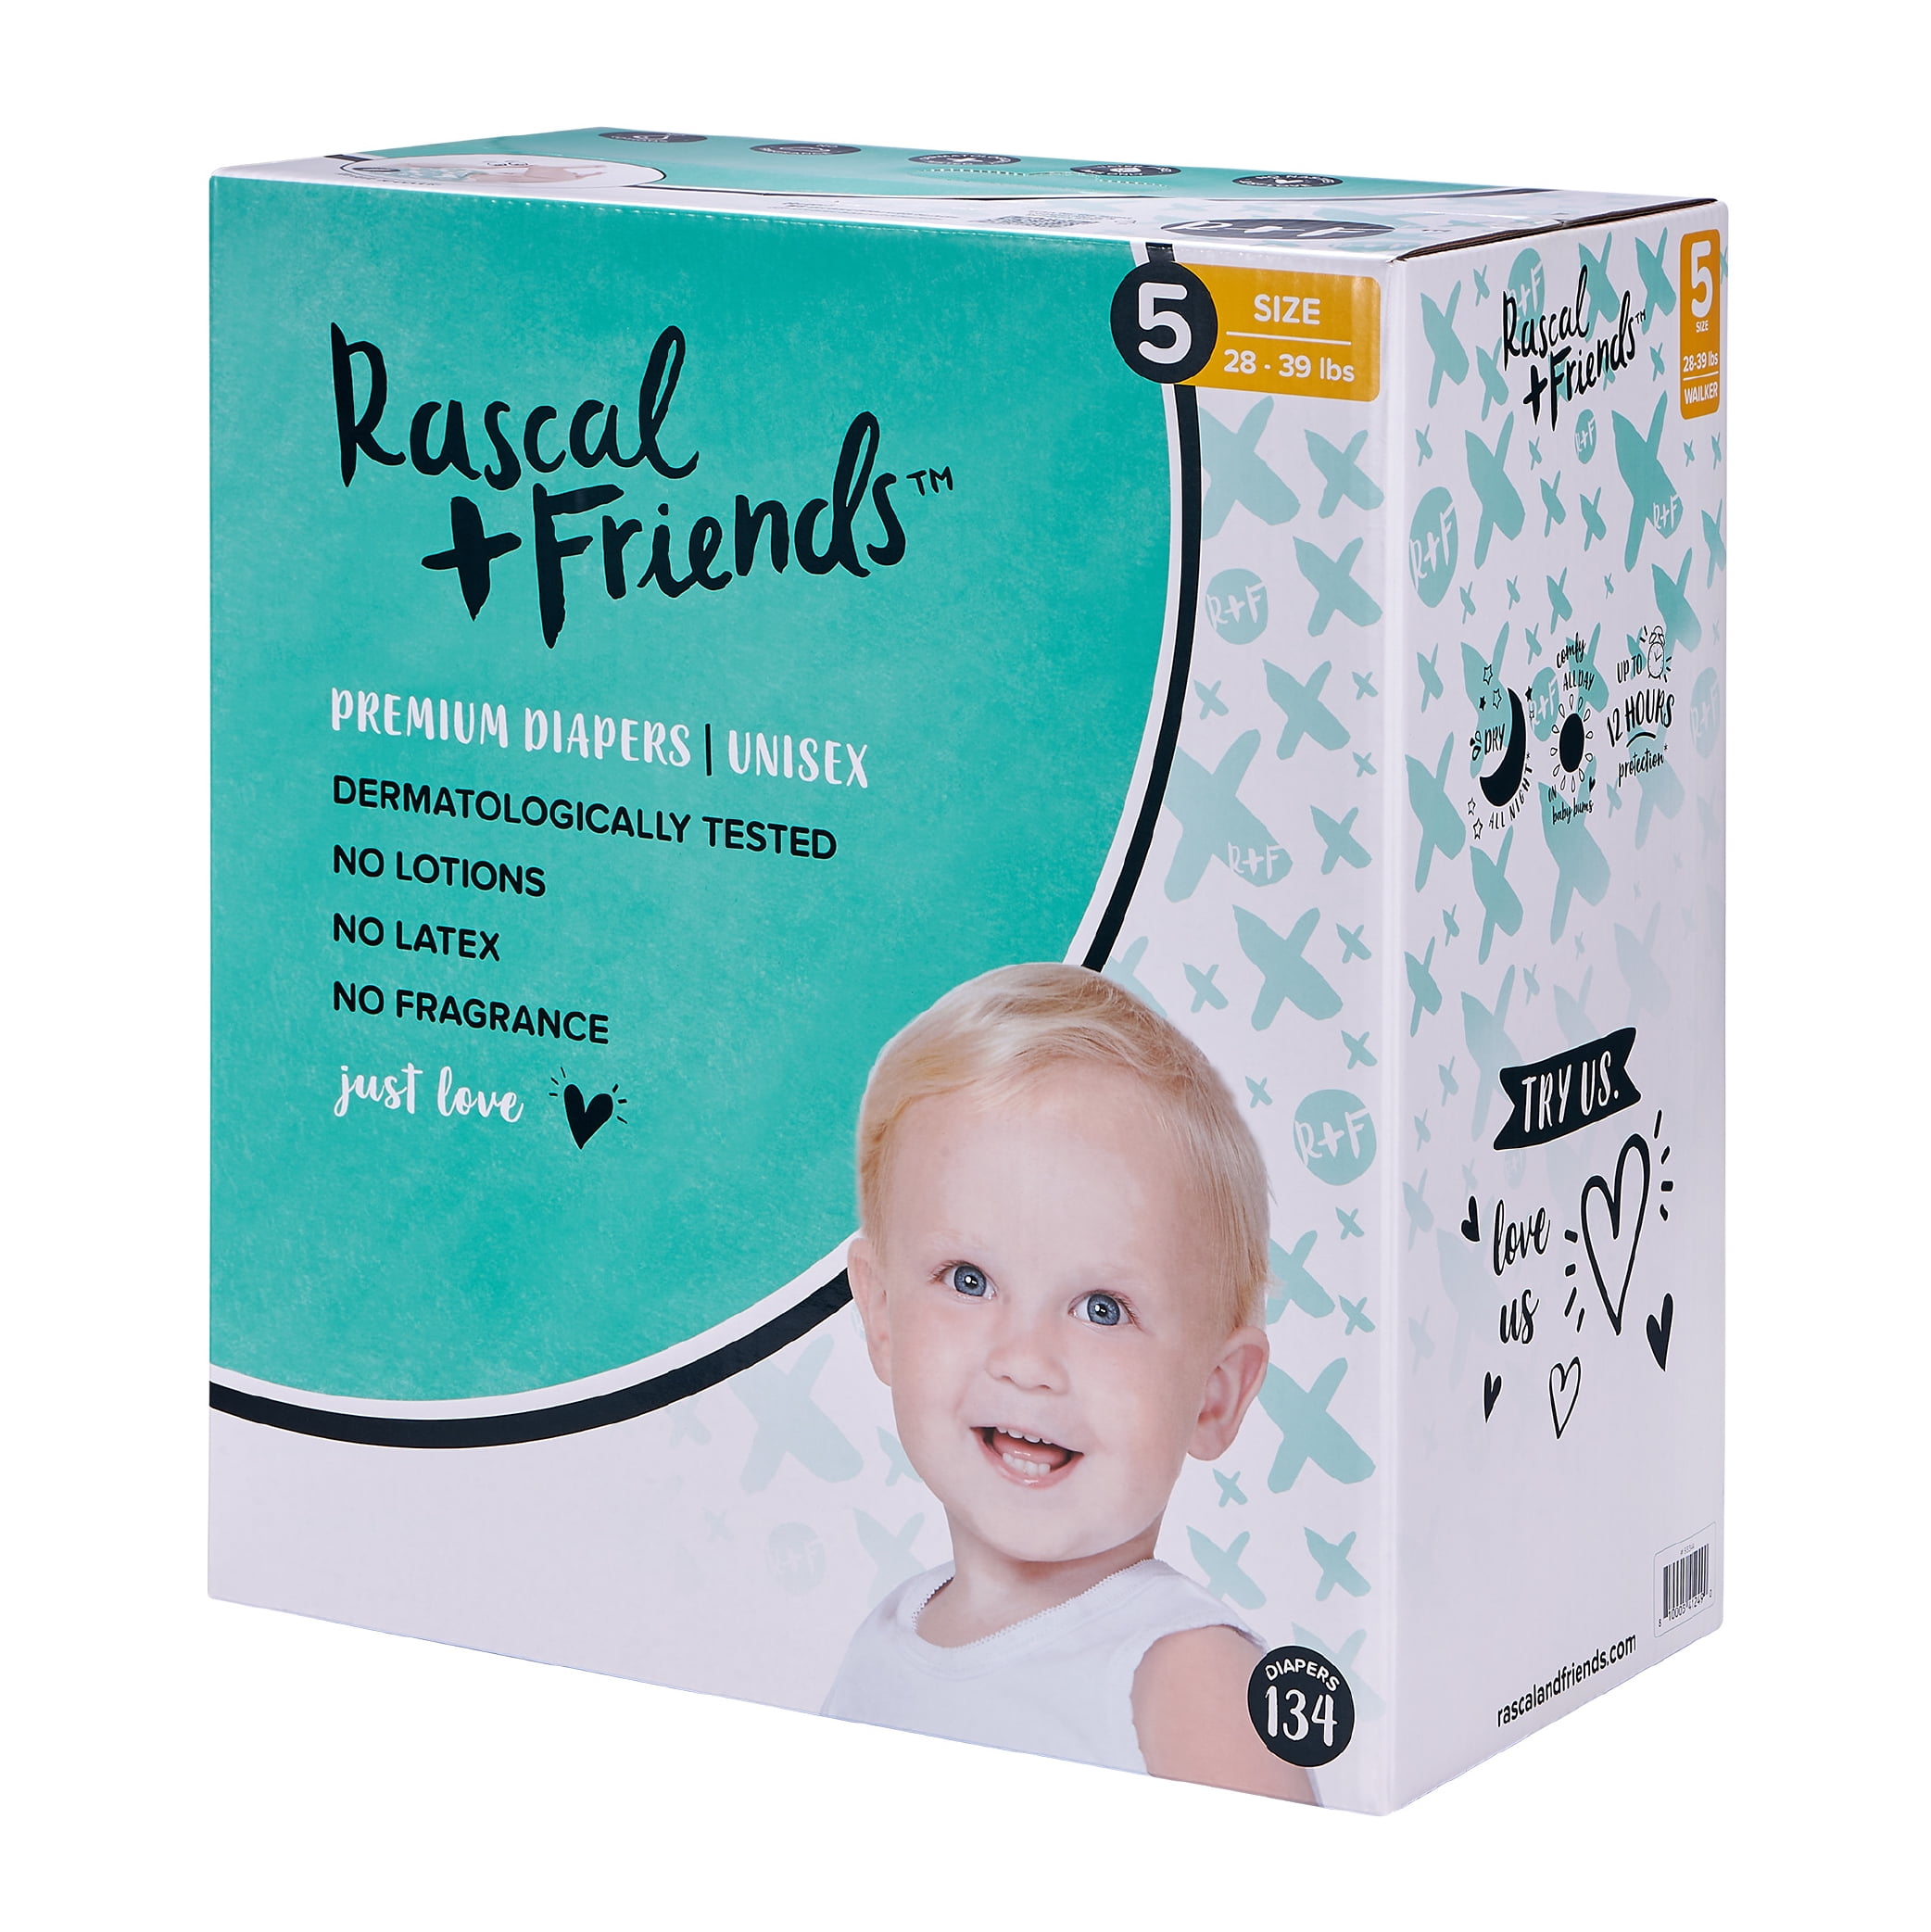 Rascal + Friends Premium Nappies Unisex Walker Size 5 Review, Disposable  nappy